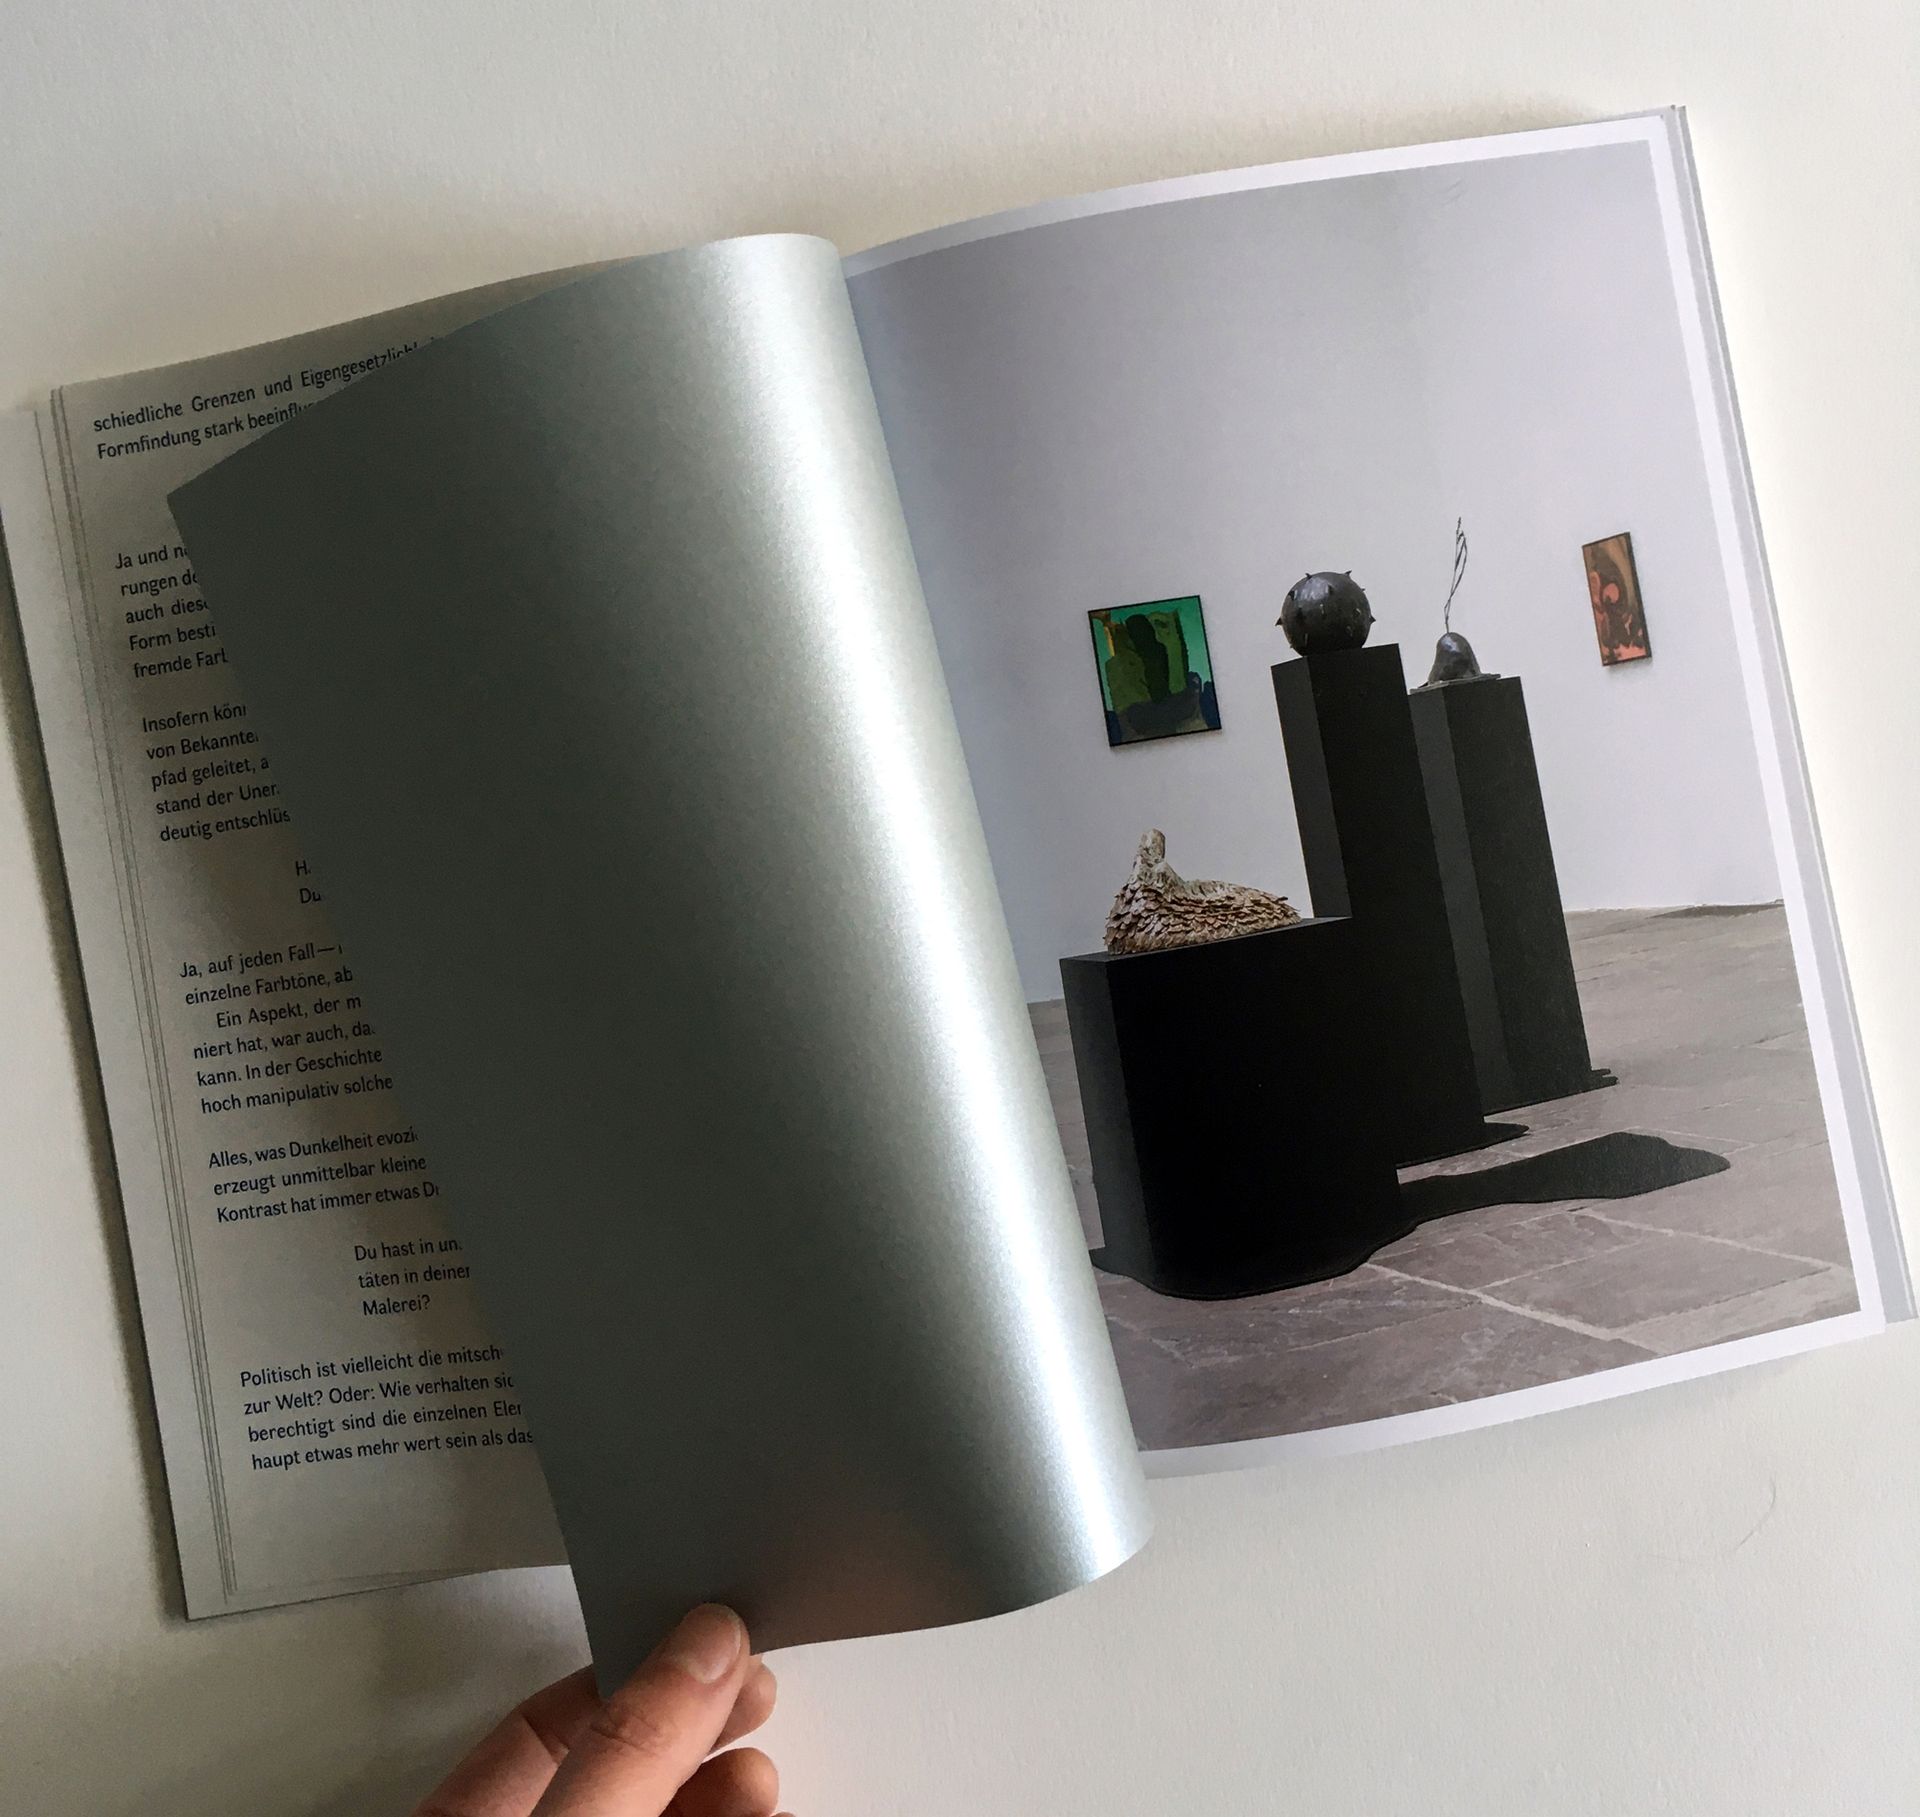 This conversation was first published in ,Veronika Hilger,, 2021, Verlag für Moderne Kunst.,Order the catalogue here!